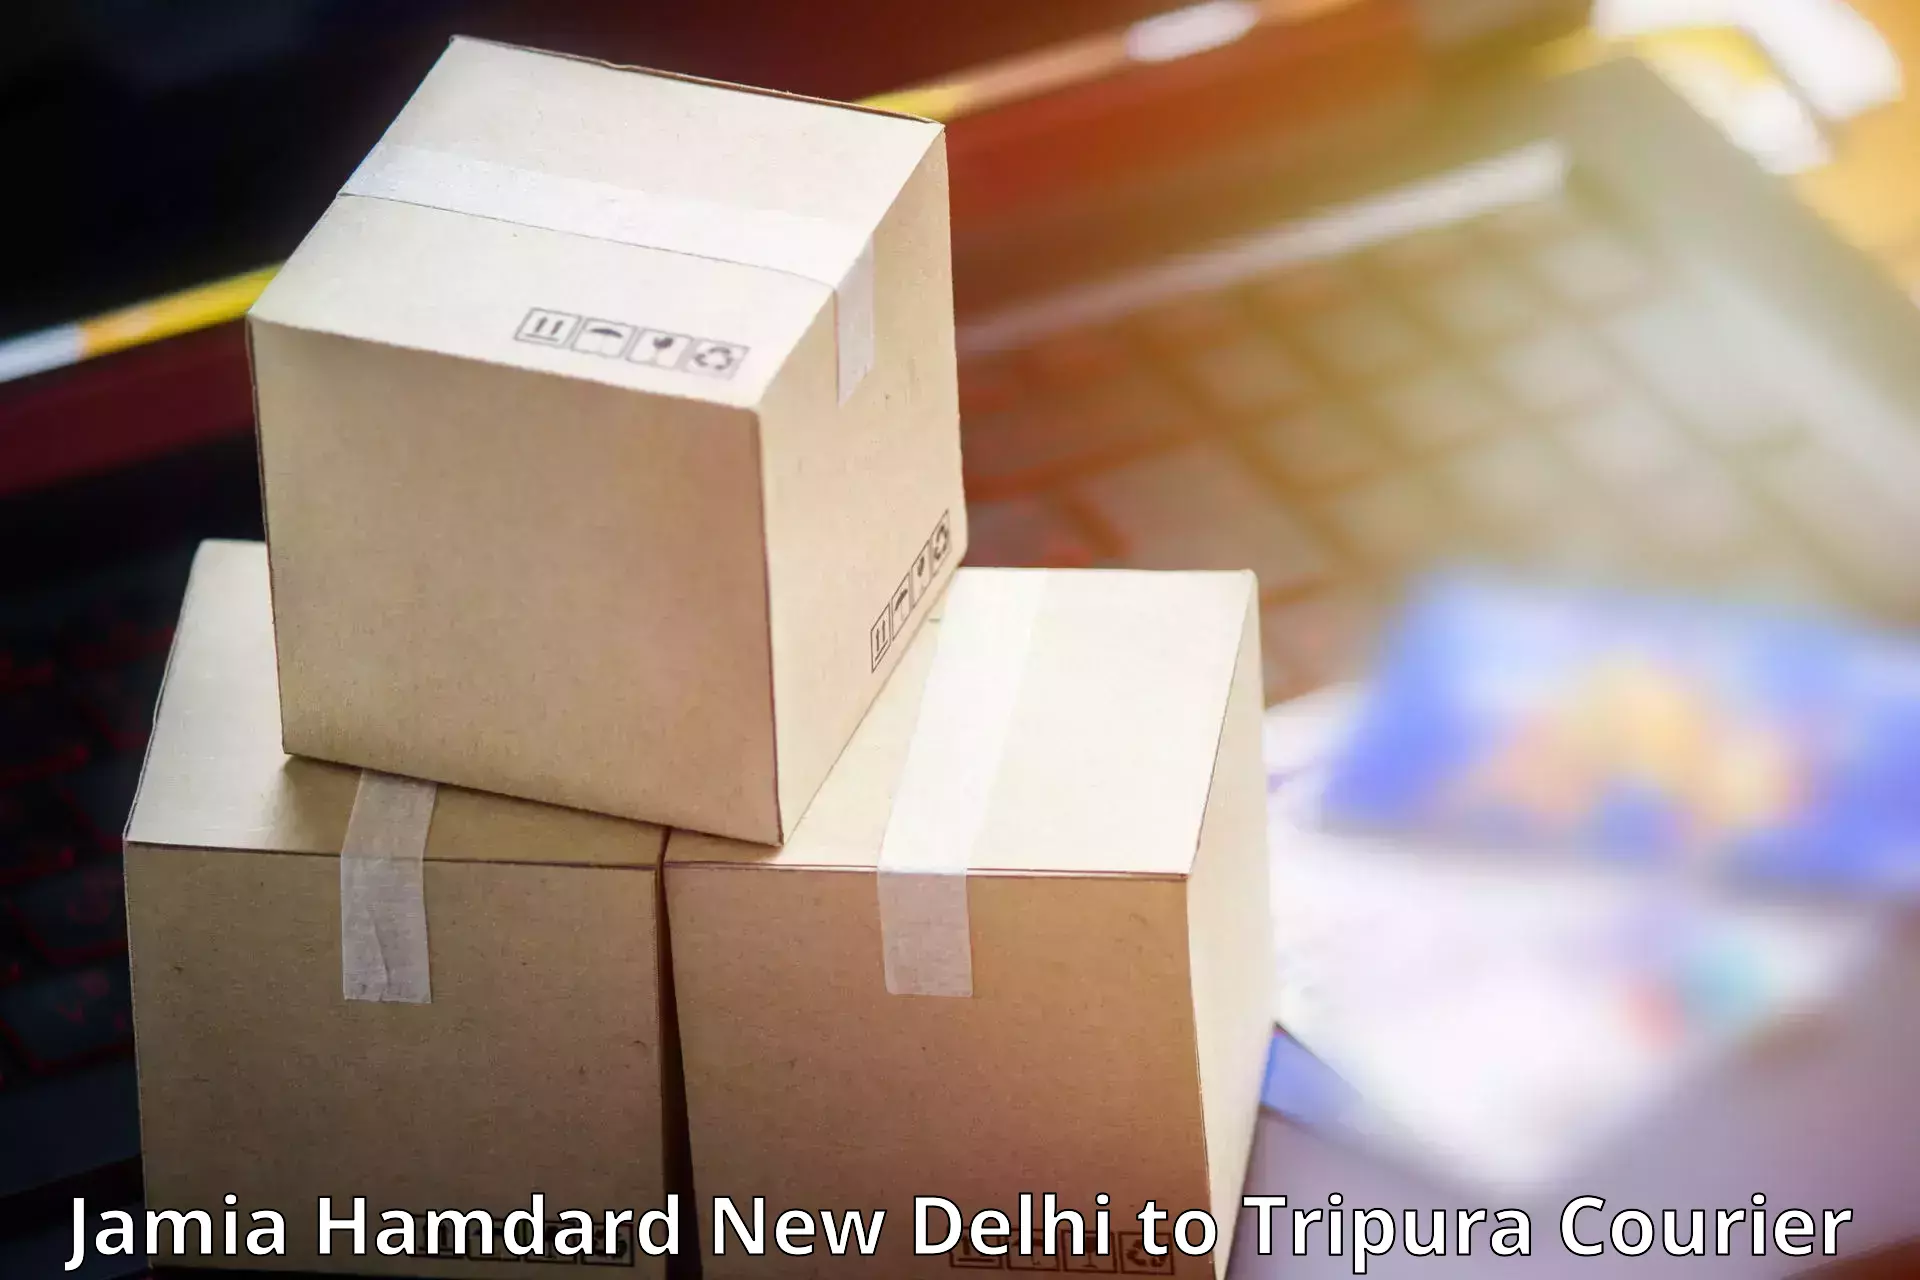 Reliable courier service Jamia Hamdard New Delhi to Udaipur Tripura